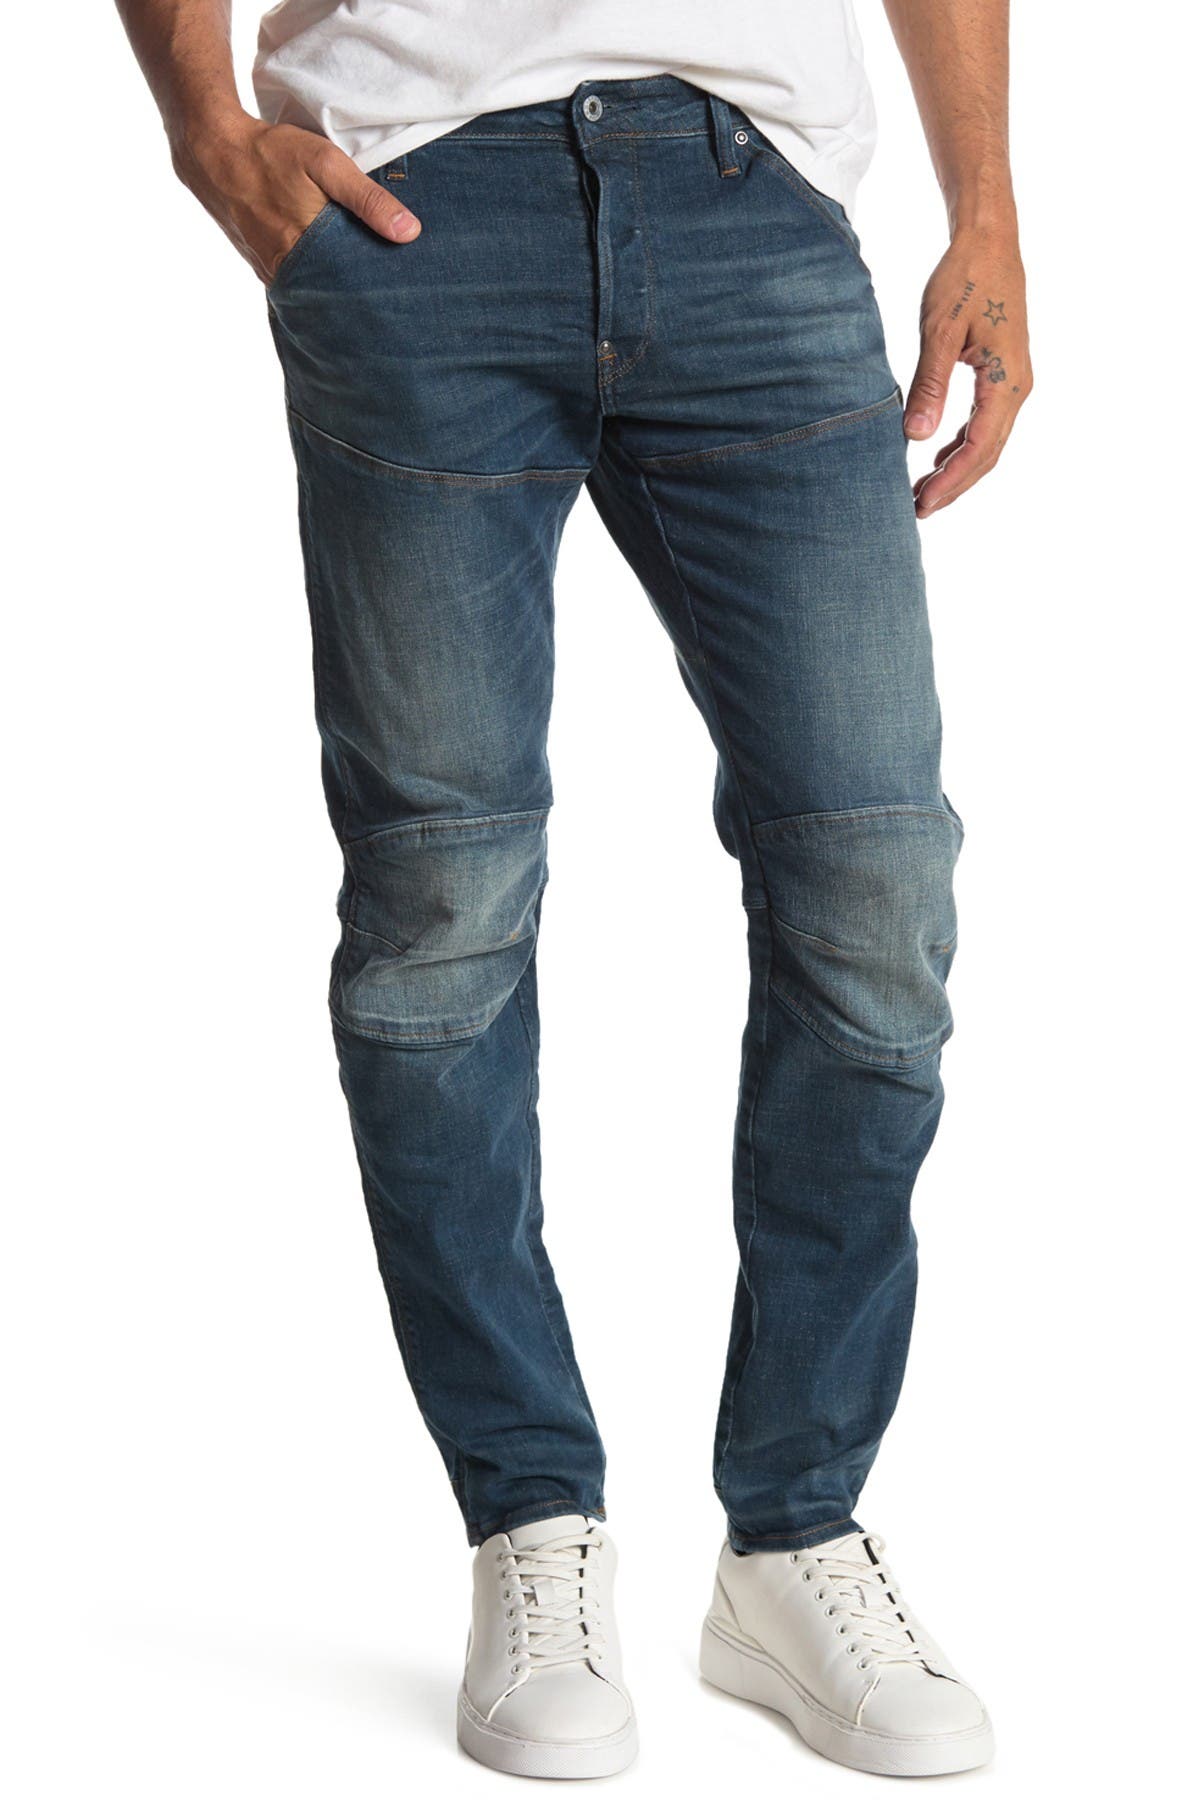 raw 5620 jeans